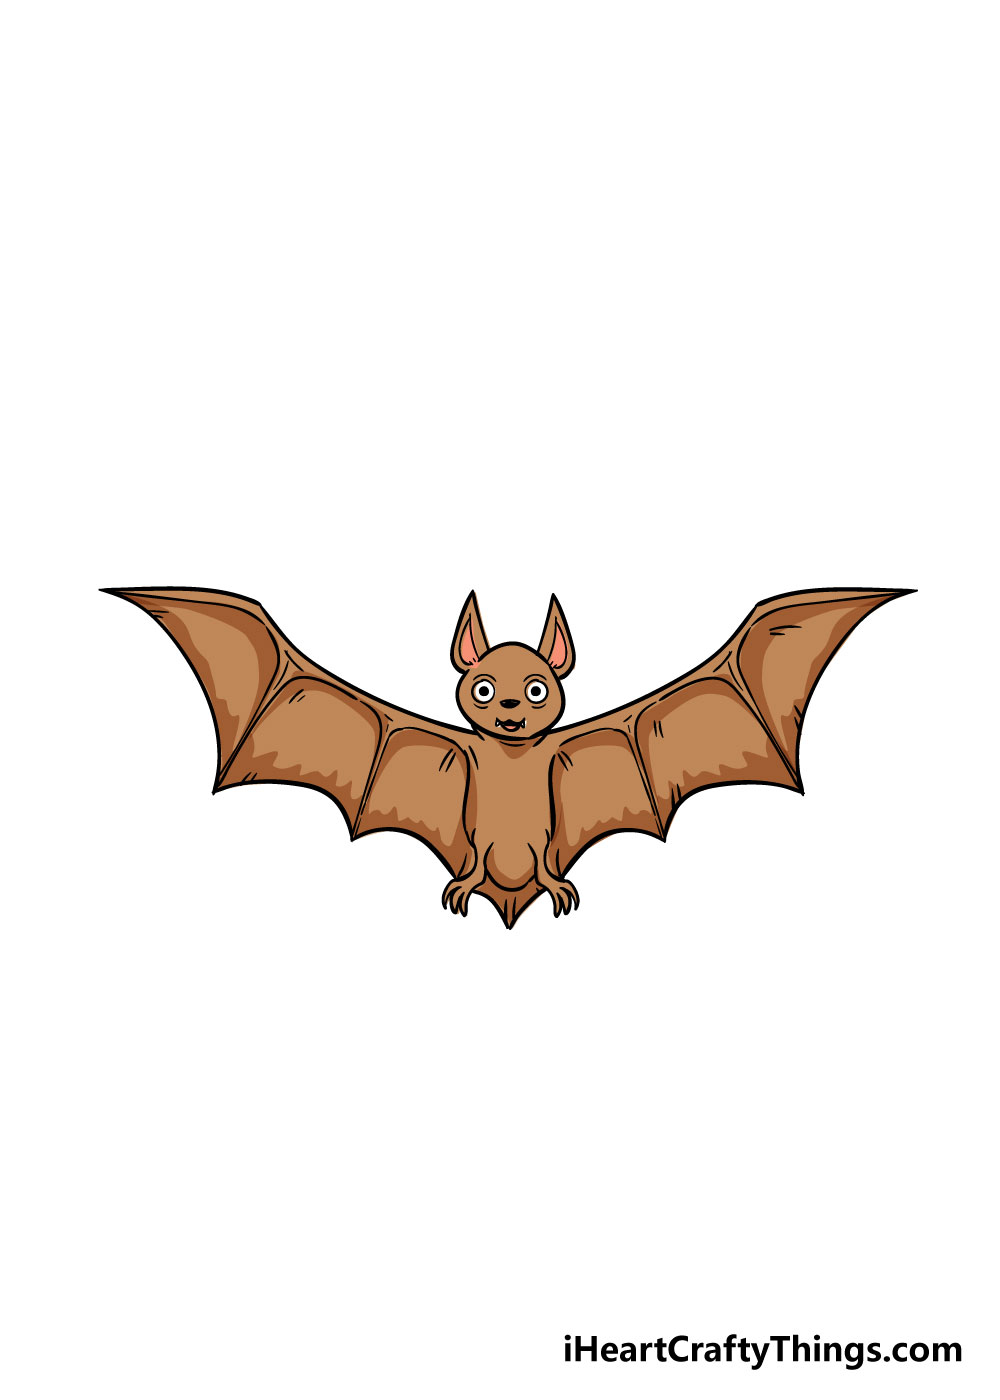 File:Bat (PSF).jpg - Wikipedia